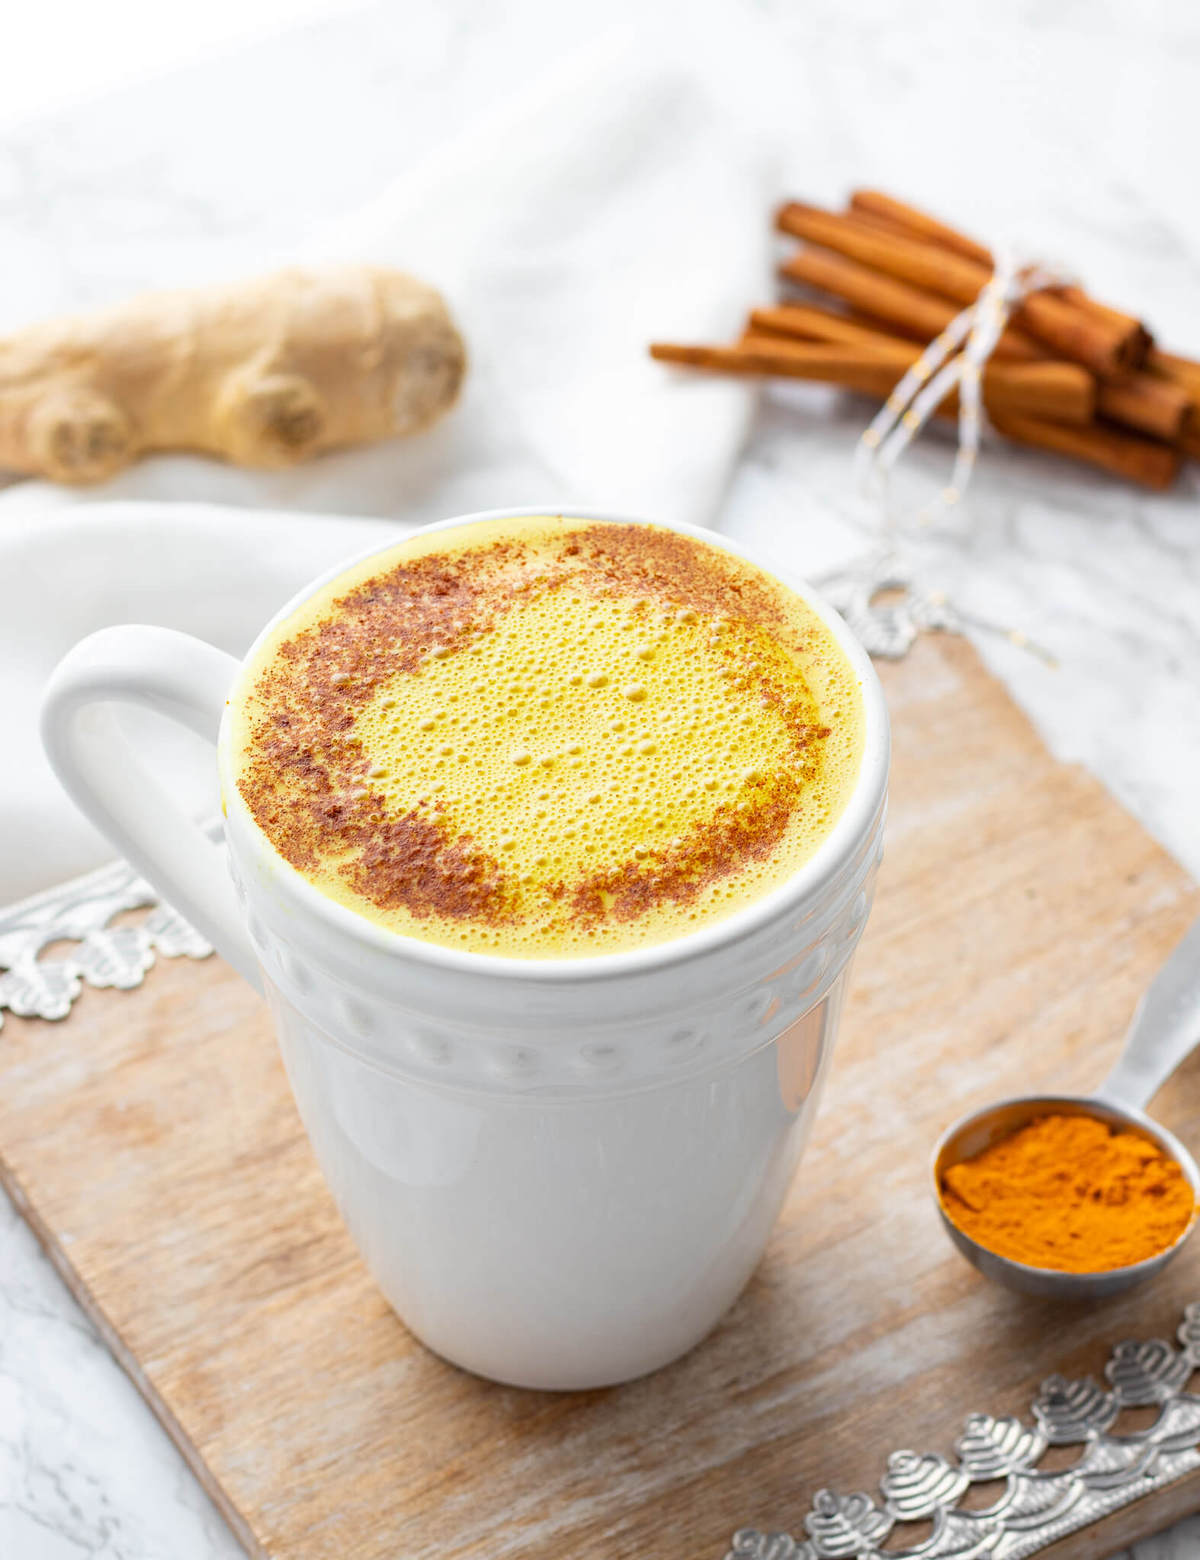 Turmeric Latte with Almond Milk {Golden Milk Recipe}